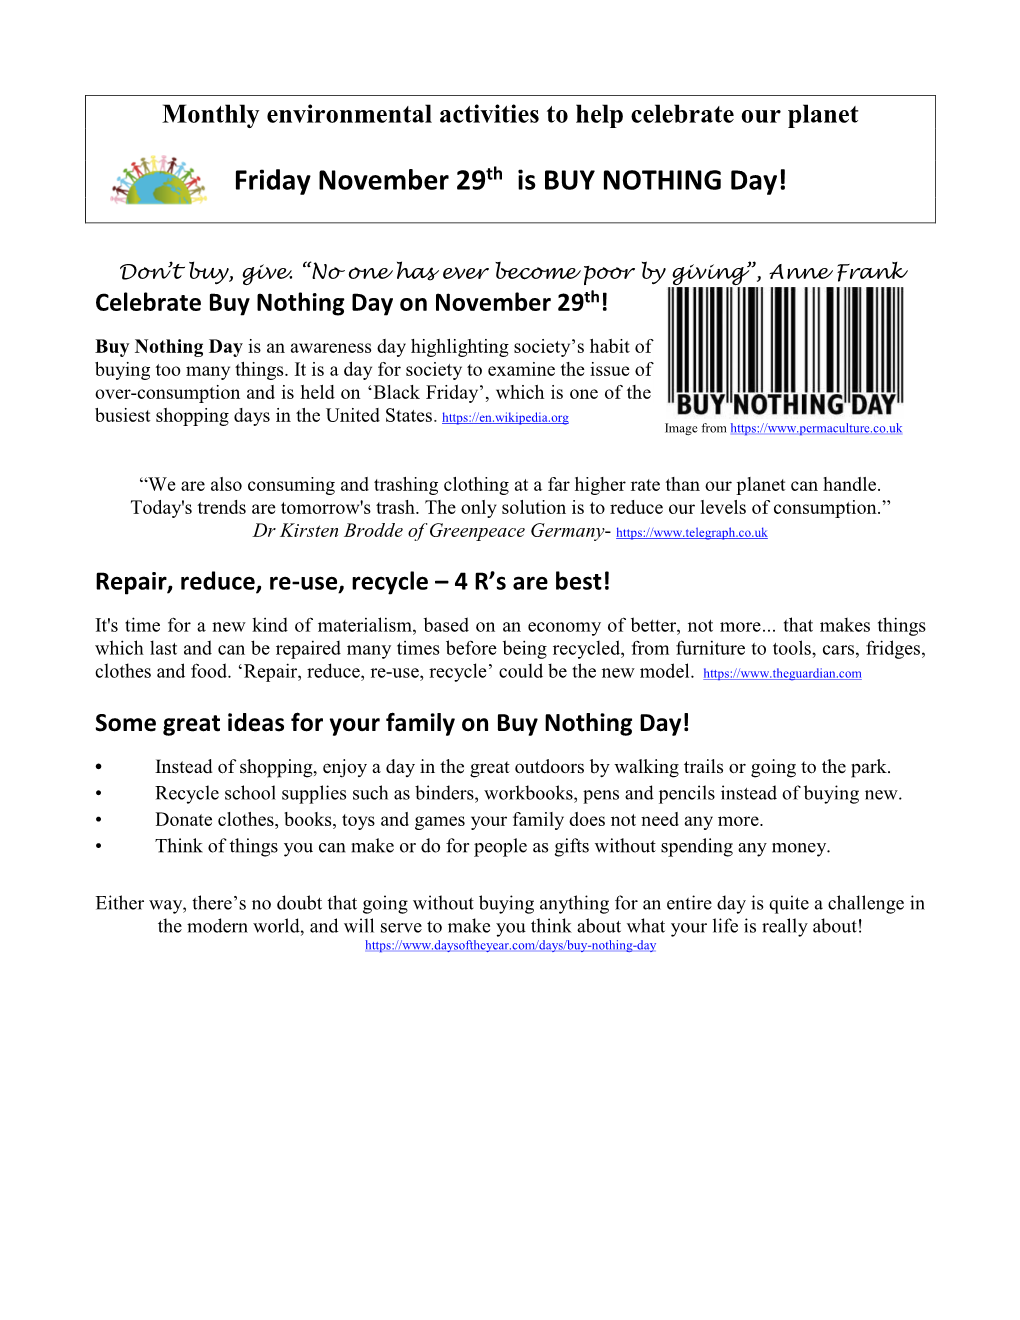 Buy Nothing Day 2017 Newsletter